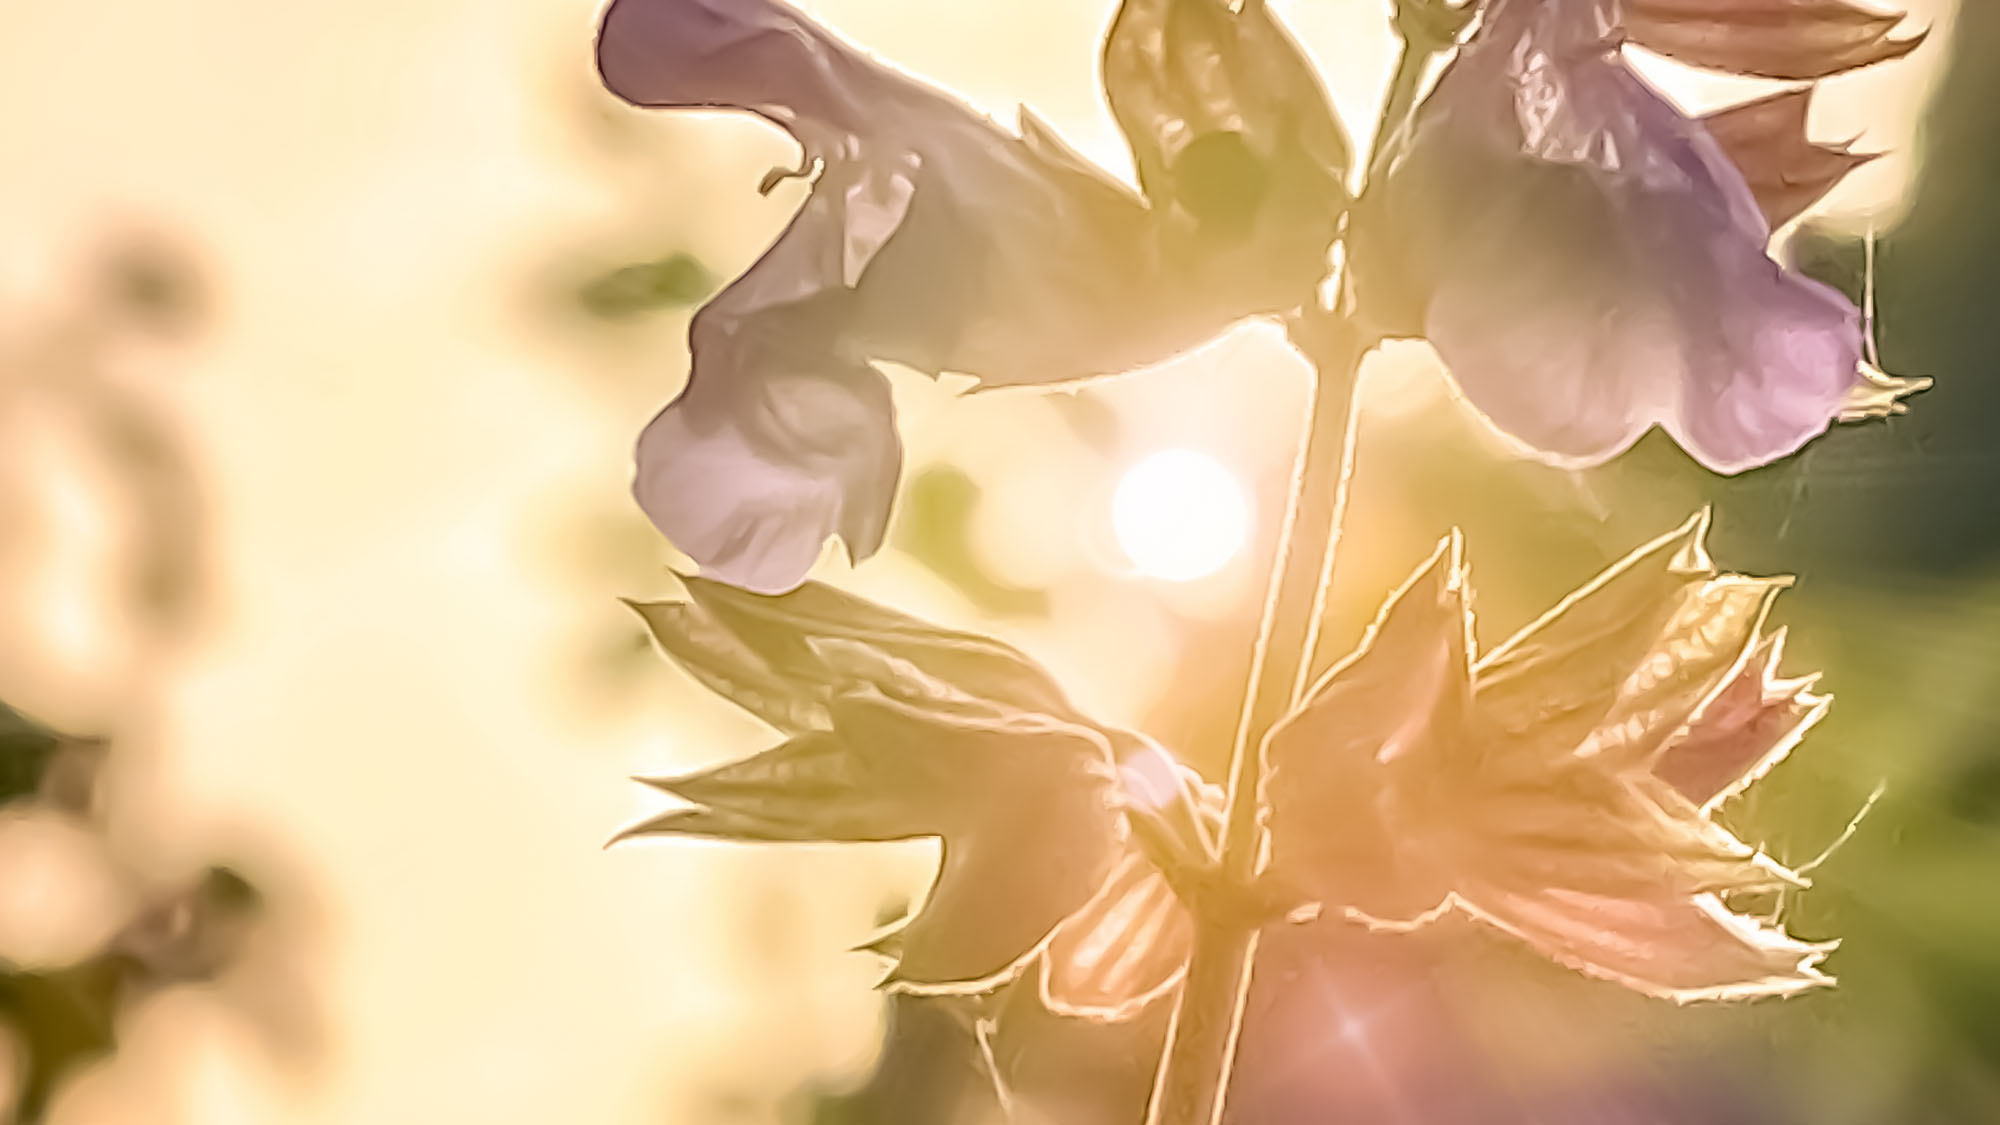 Sunrise Flower Editing on Mobile